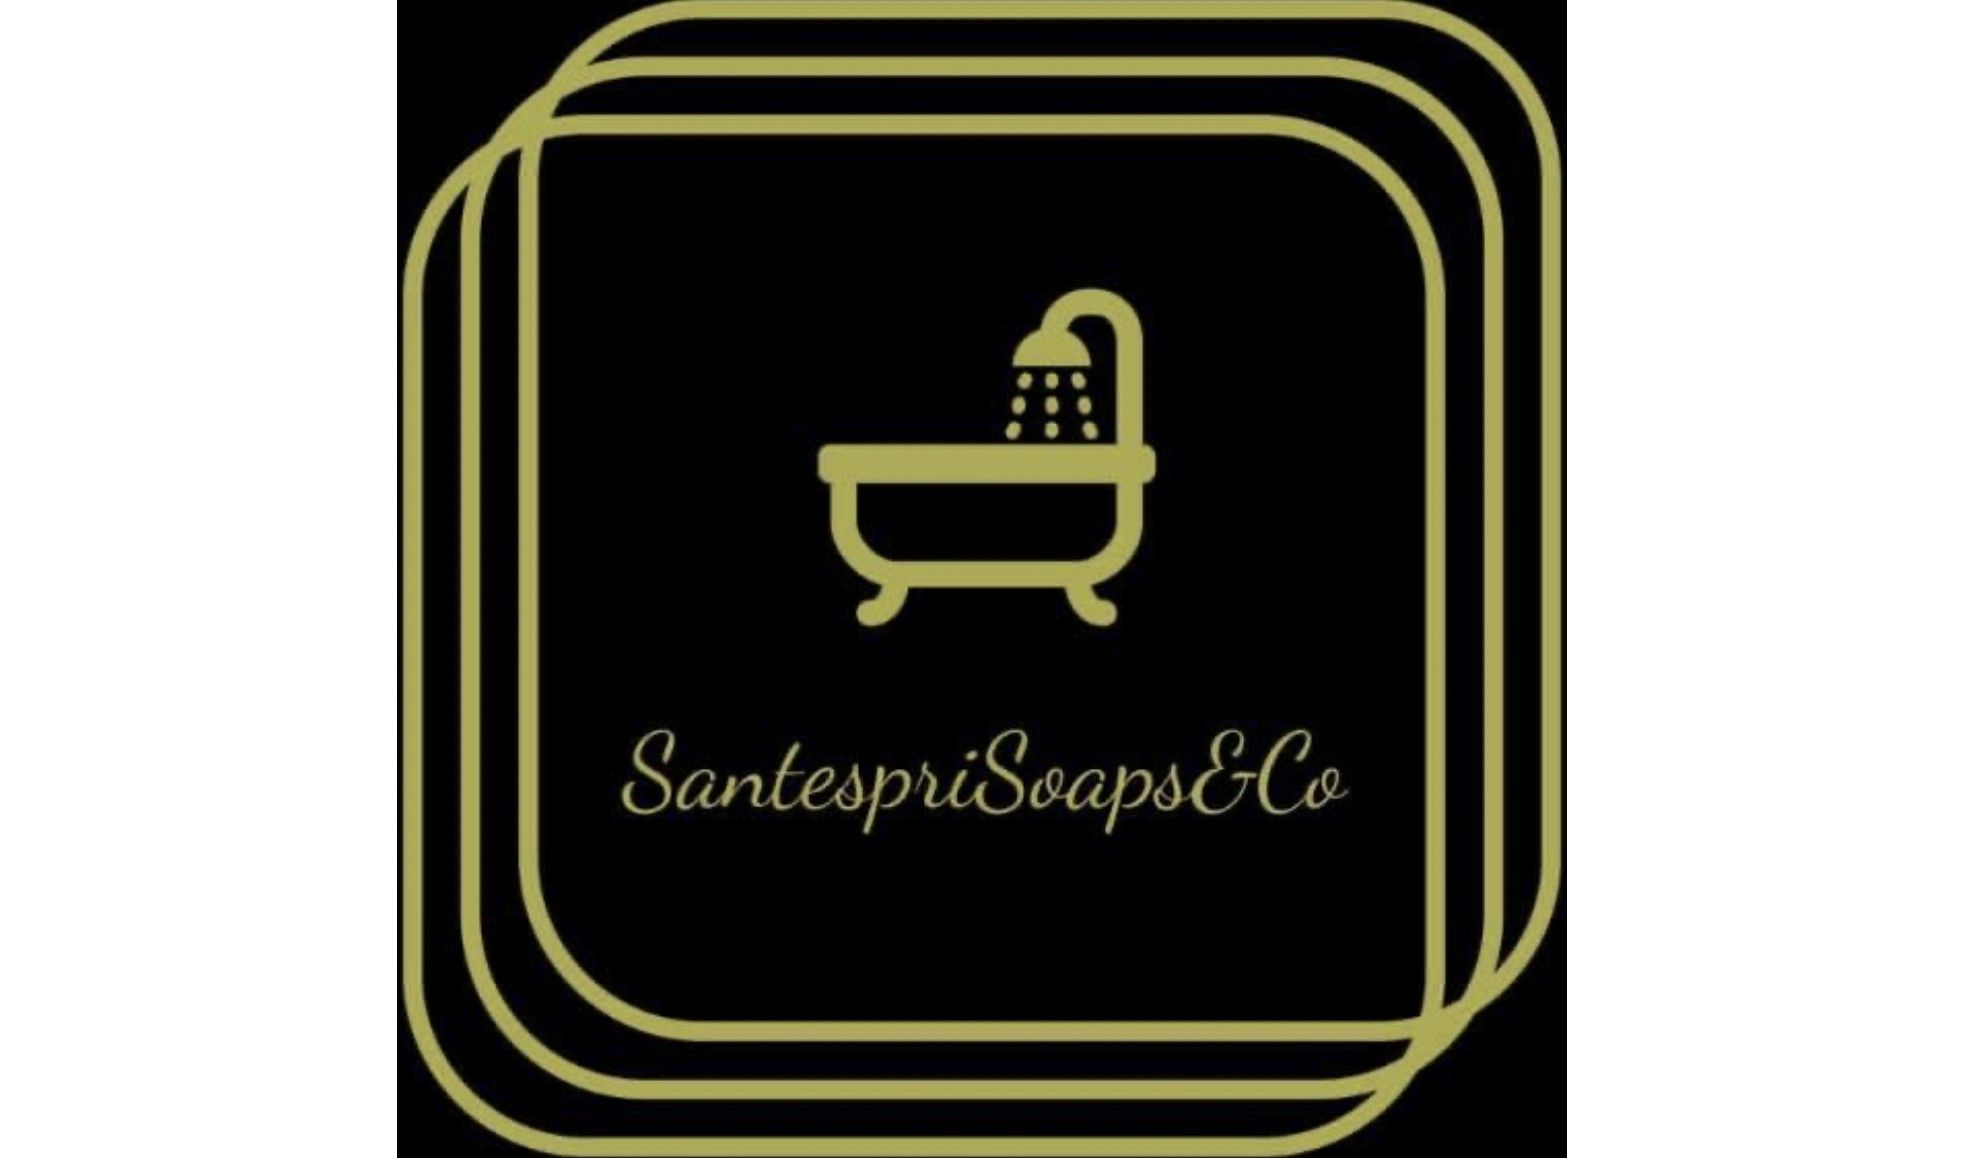 Quality Skin Care - SantespriSoaps&Co